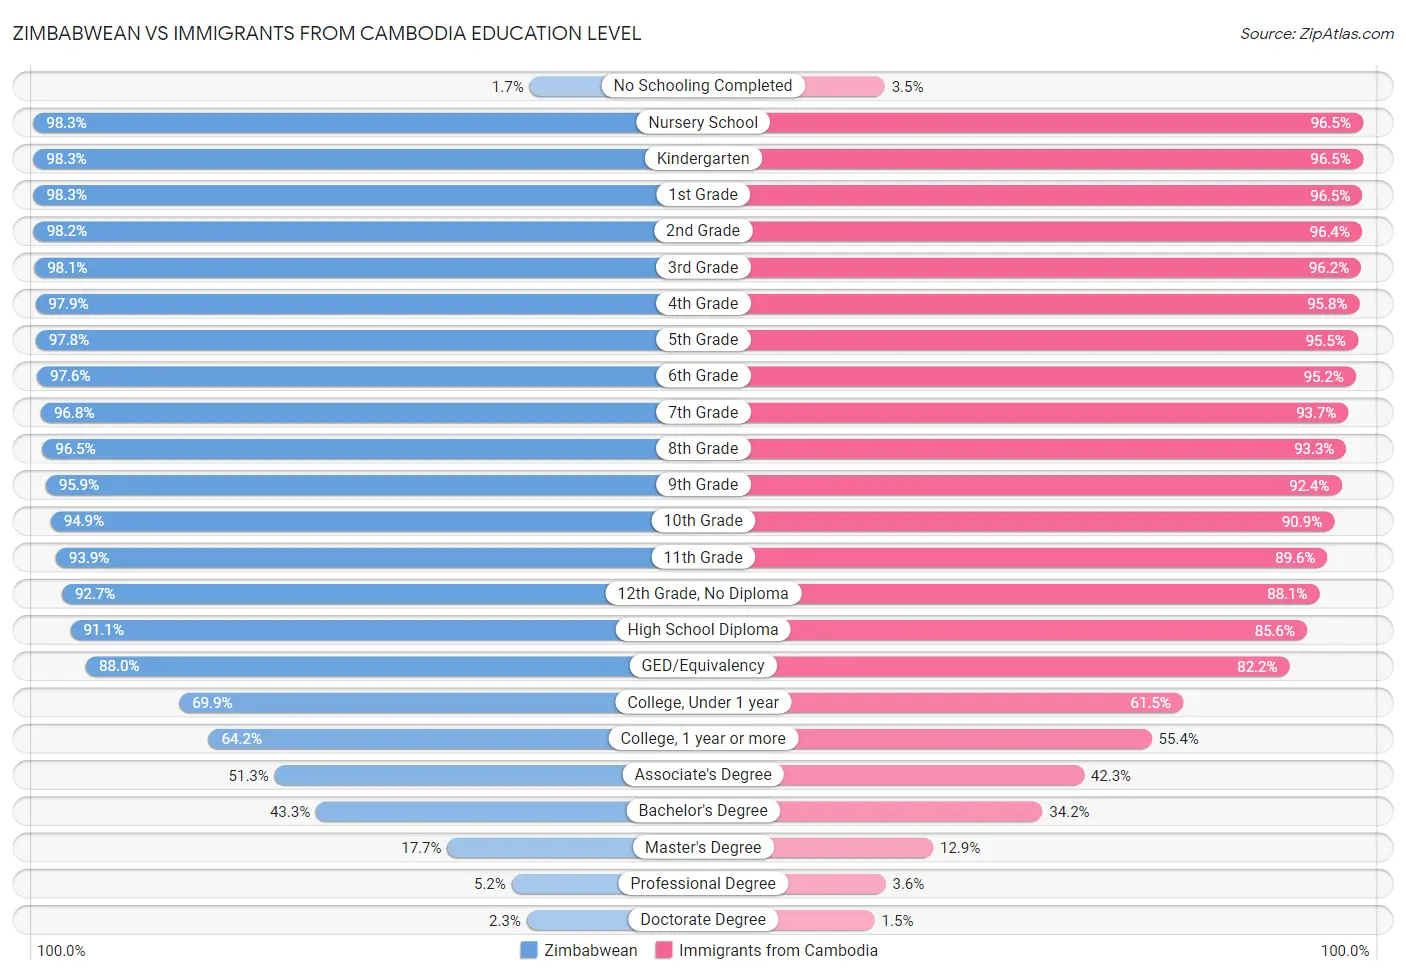 Zimbabwean vs Immigrants from Cambodia Education Level